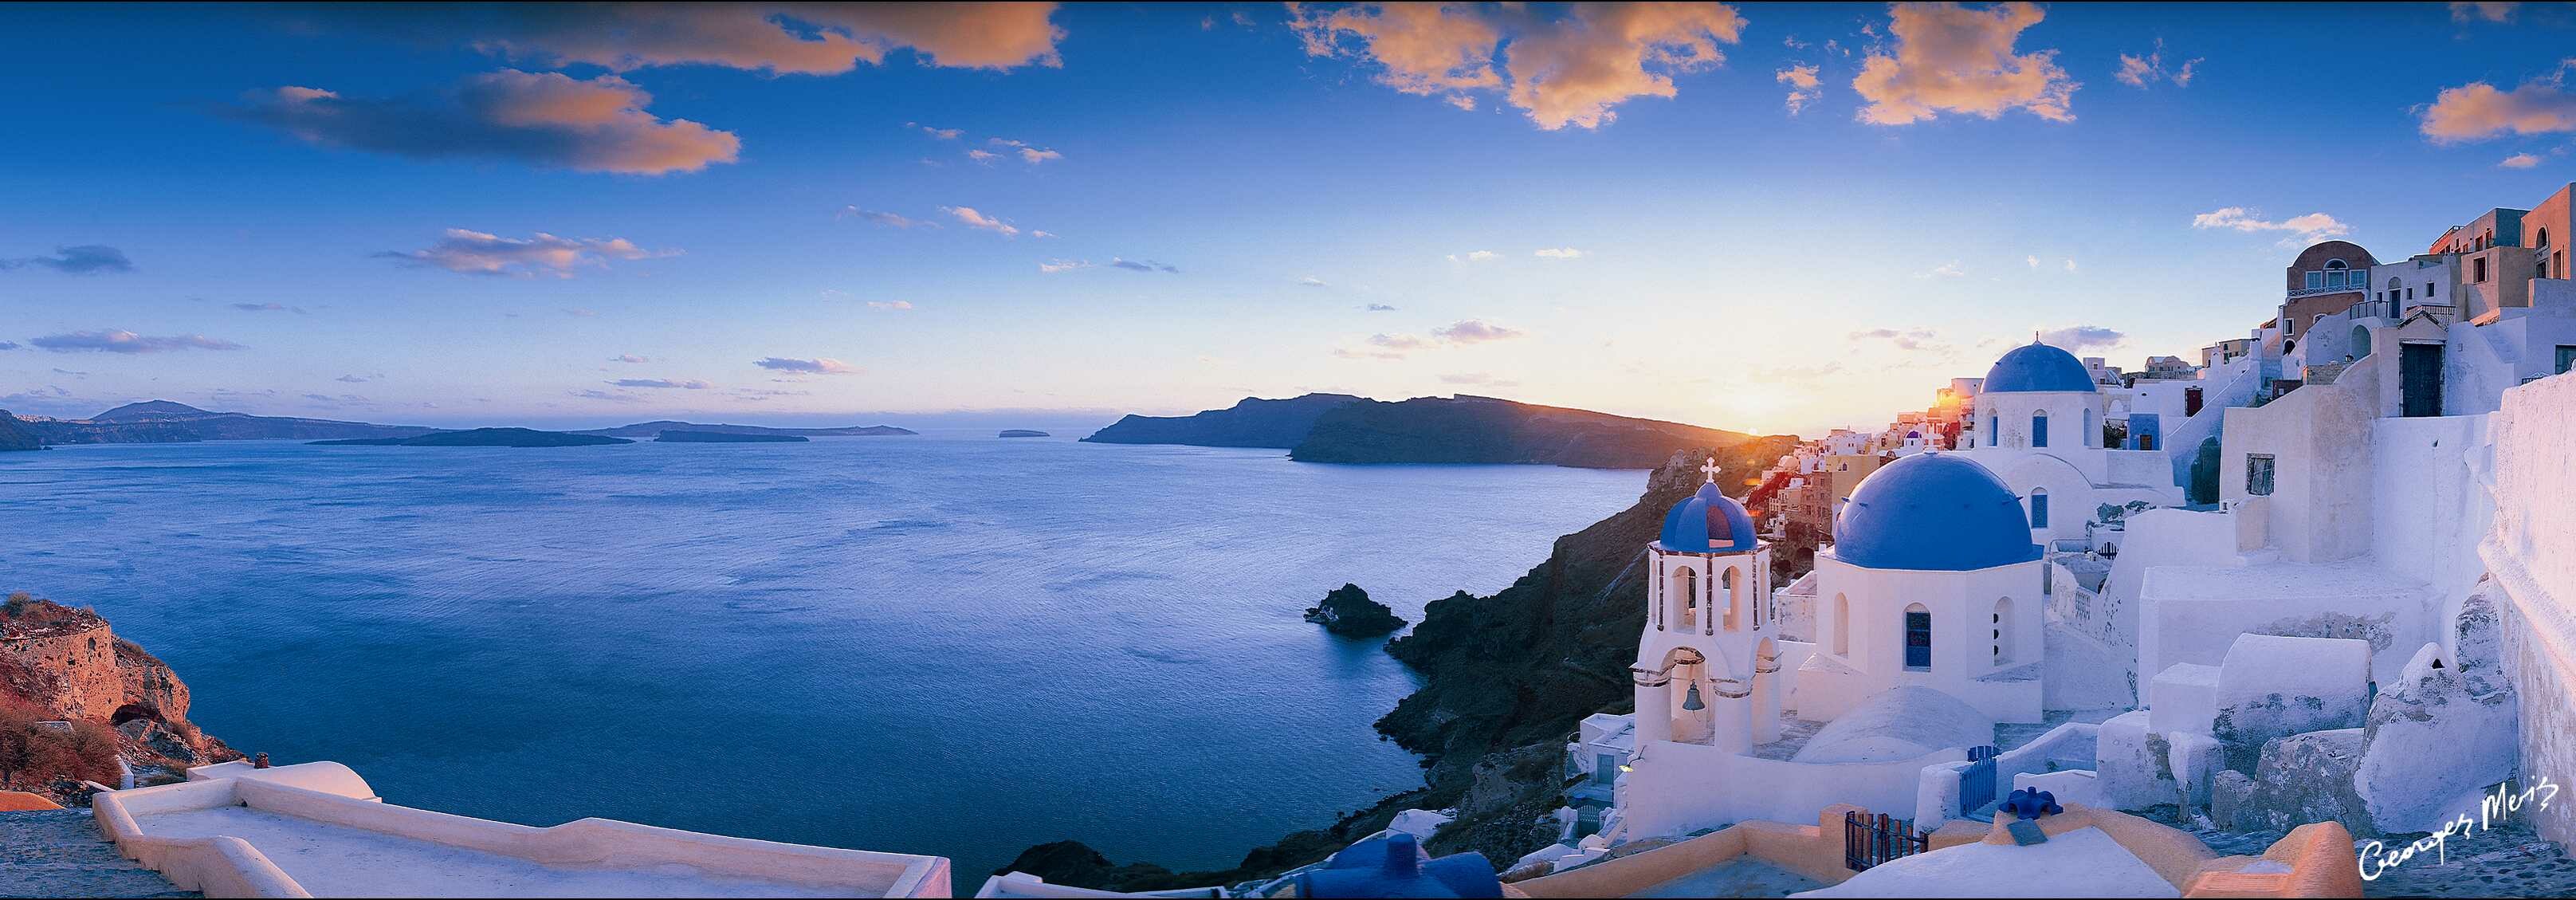 Santorini Greece Wallpaper HD 4k 5k For Pc And Mobile